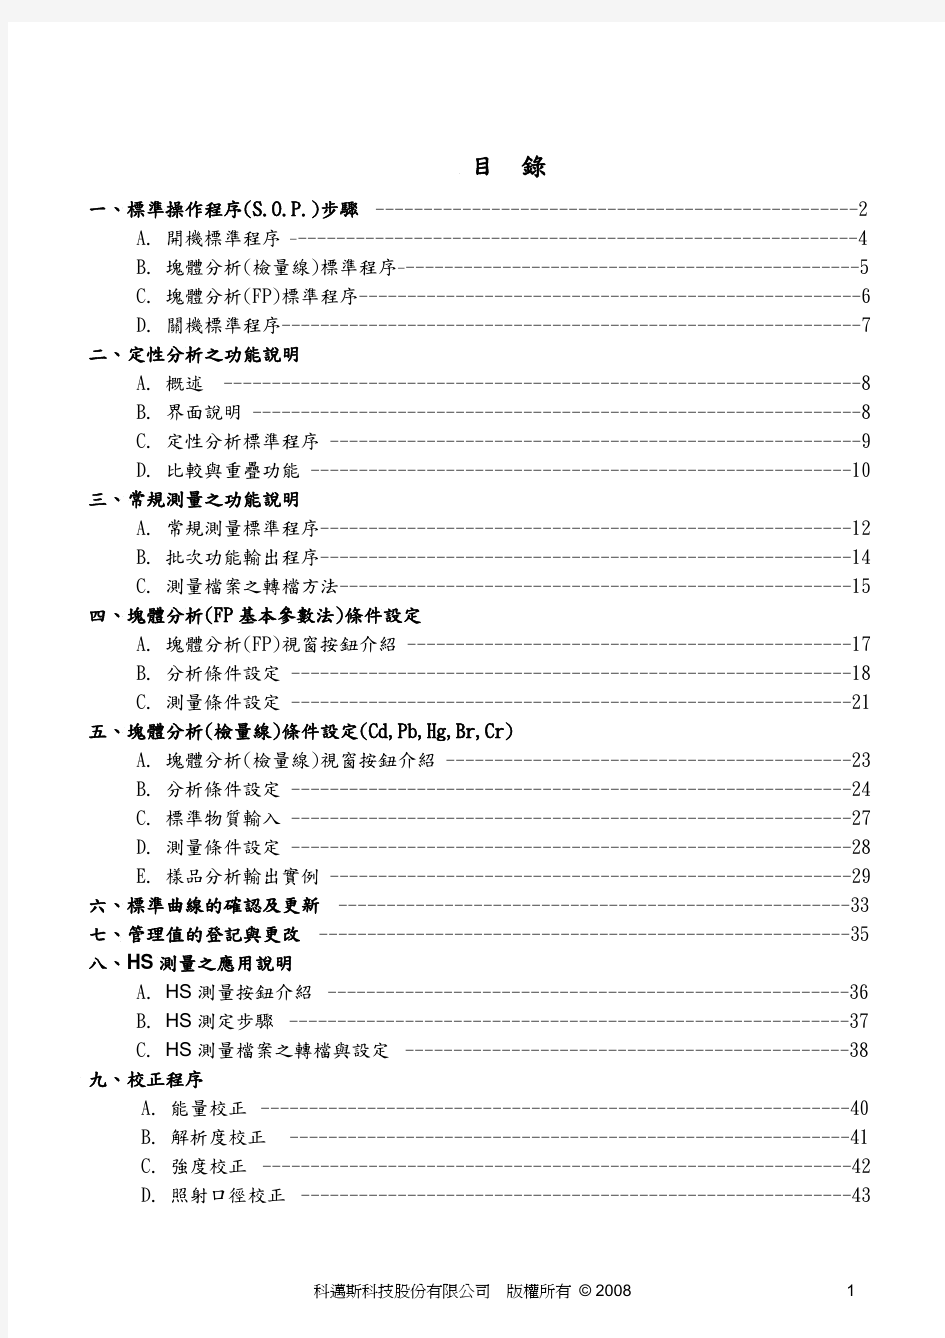 SEA1000A系列中文操作手册-HS测量(ver2.1)